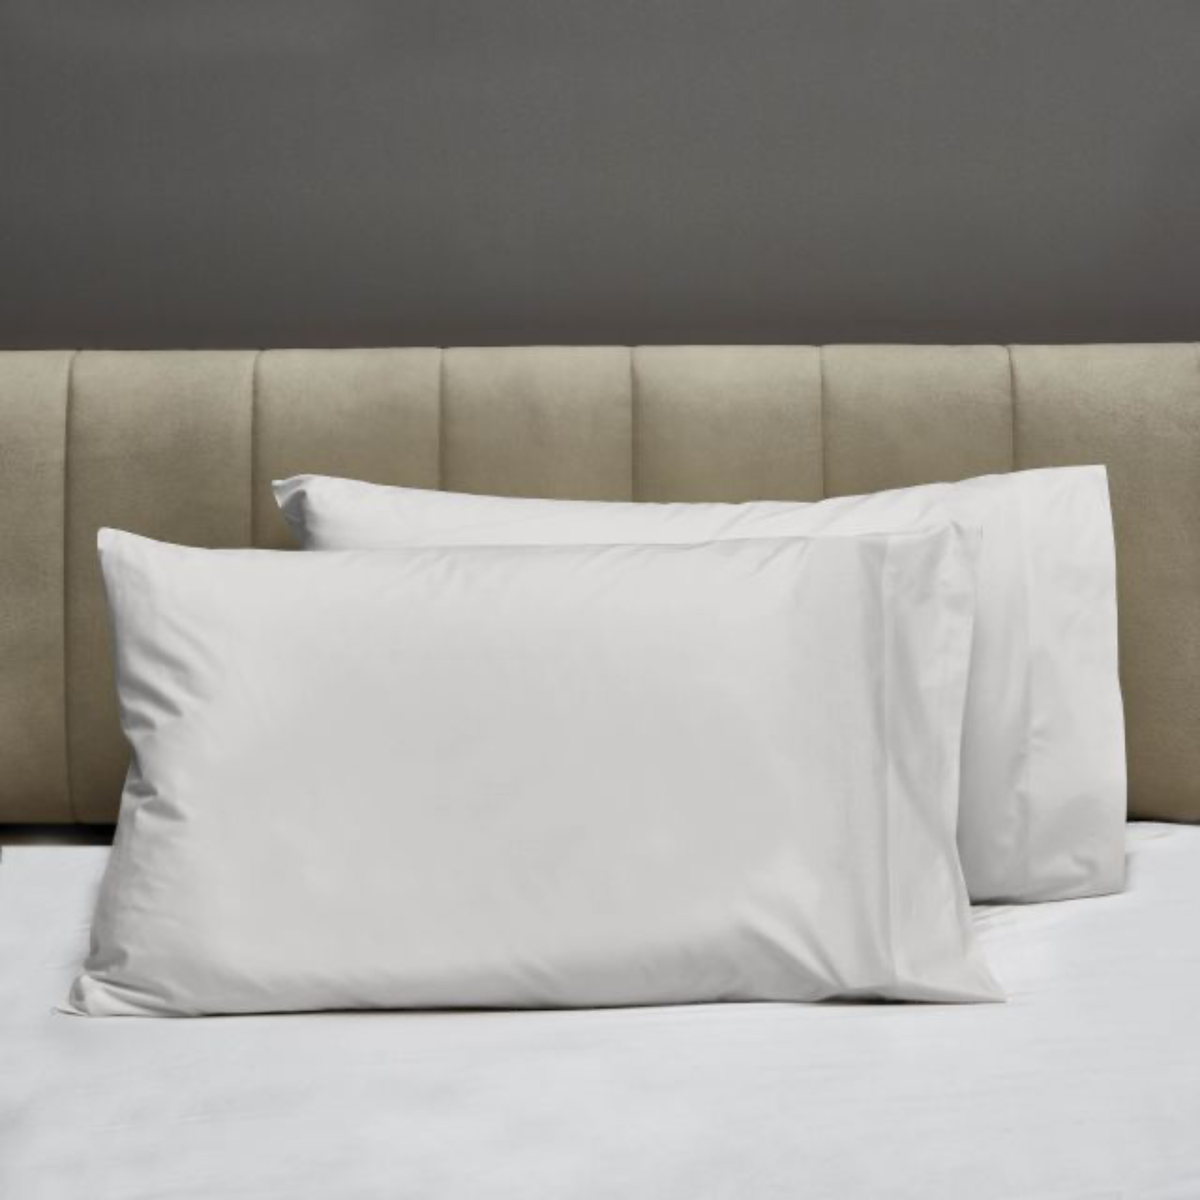 Pair of Pillowcases of Signoria Gemma Bedding in Pearl Color